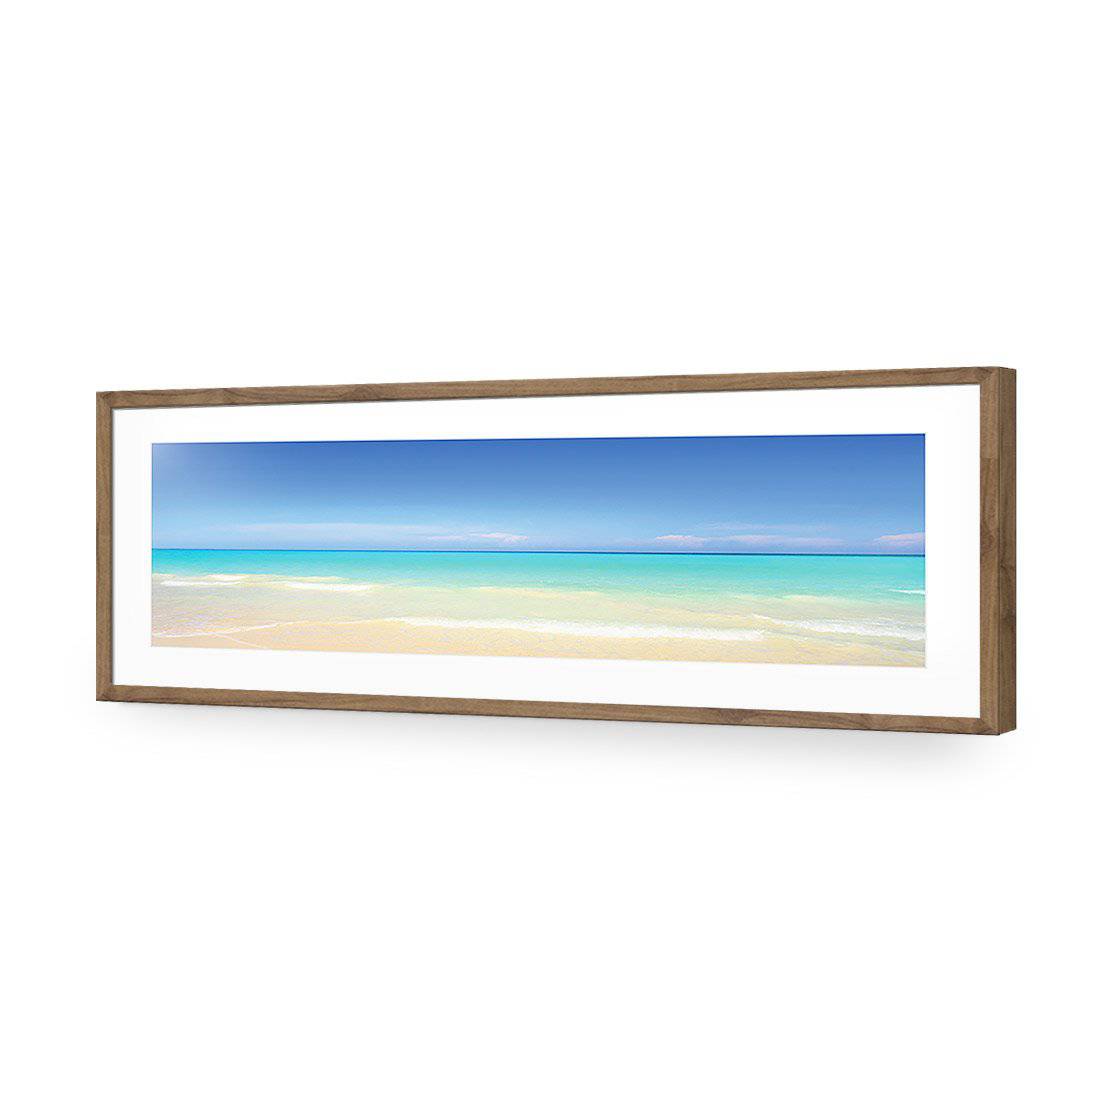 Paradise Beach, Long-Acrylic-Wall Art Design-With Border-Acrylic - Natural Frame-60x20cm-Wall Art Designs